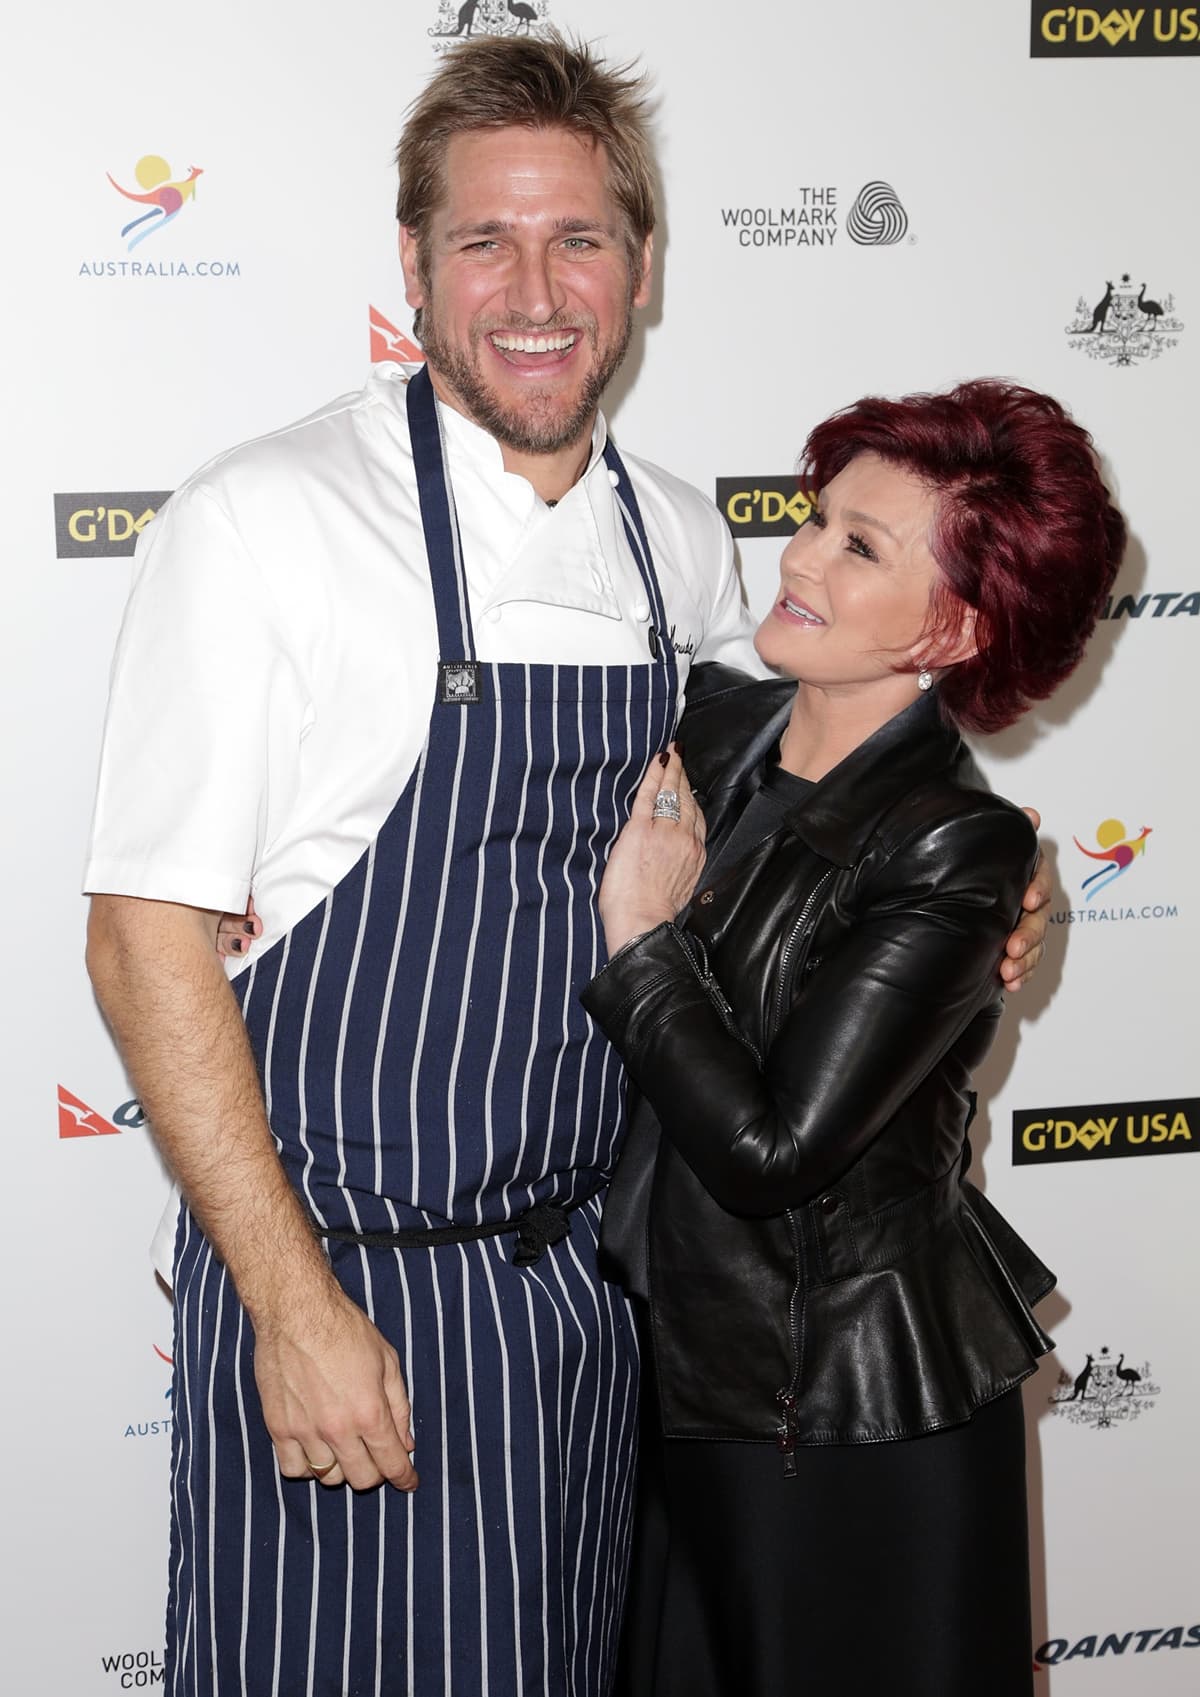 Australian celebrity chef Curtis Stone and TV personality Sharon Osbourne